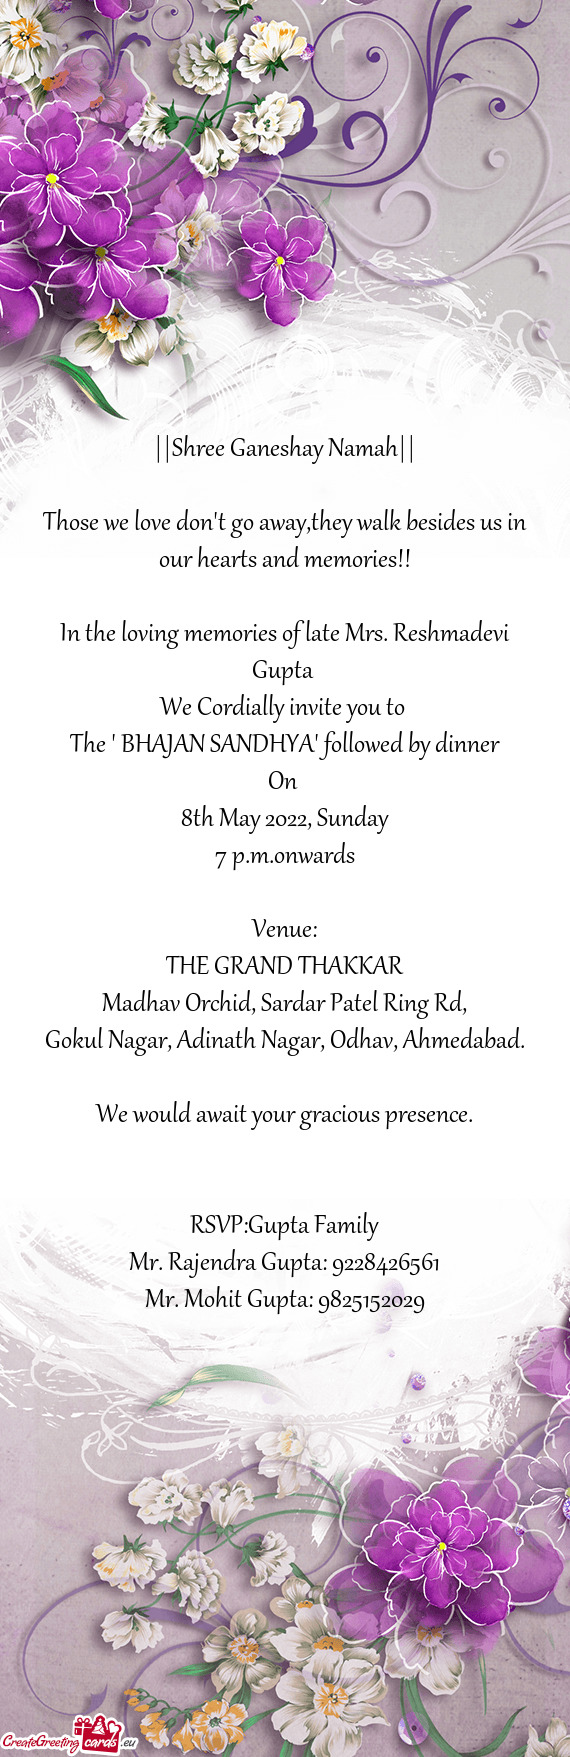 In the loving memories of late Mrs. Reshmadevi Gupta